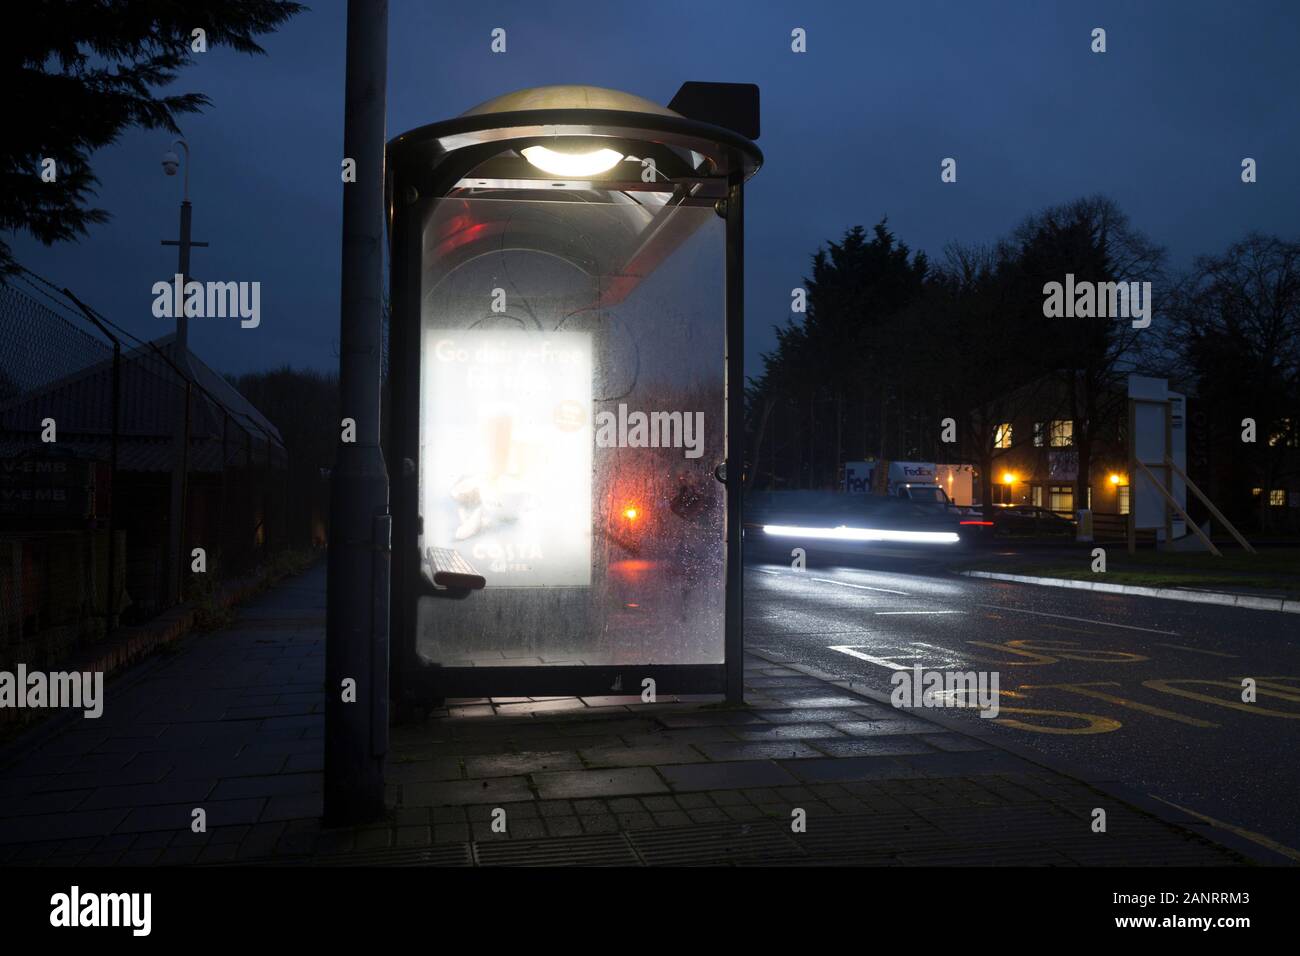 A bus shelter at night, Warwick, UK Stock Photo